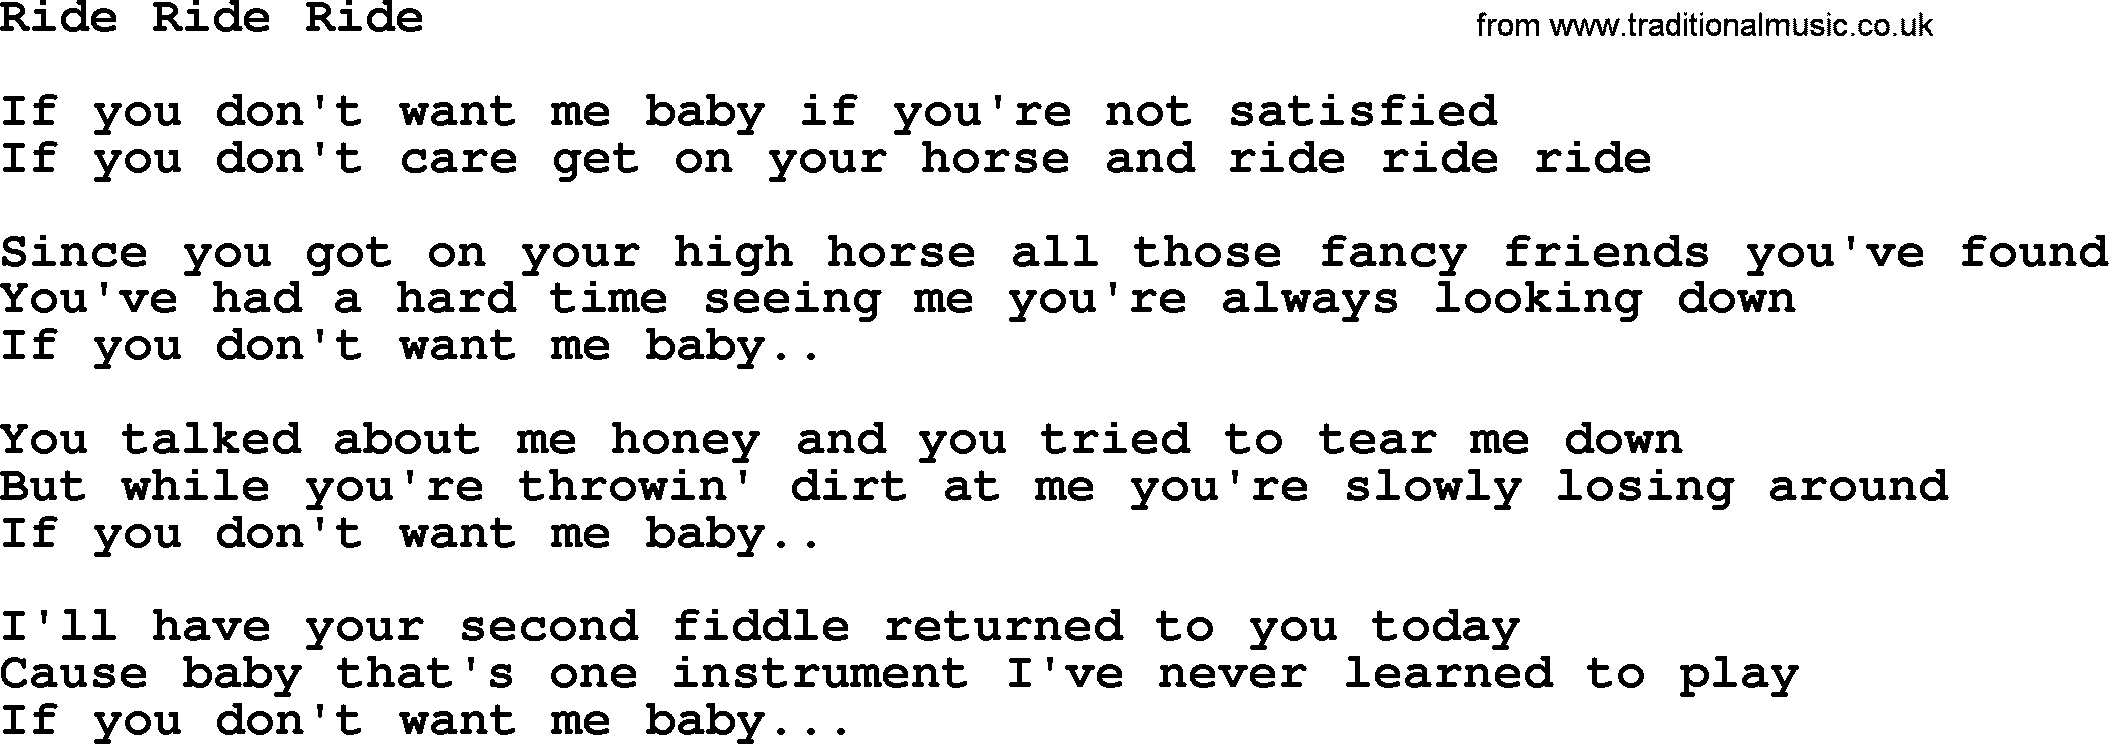 The Byrds song Ride Ride Ride, lyrics